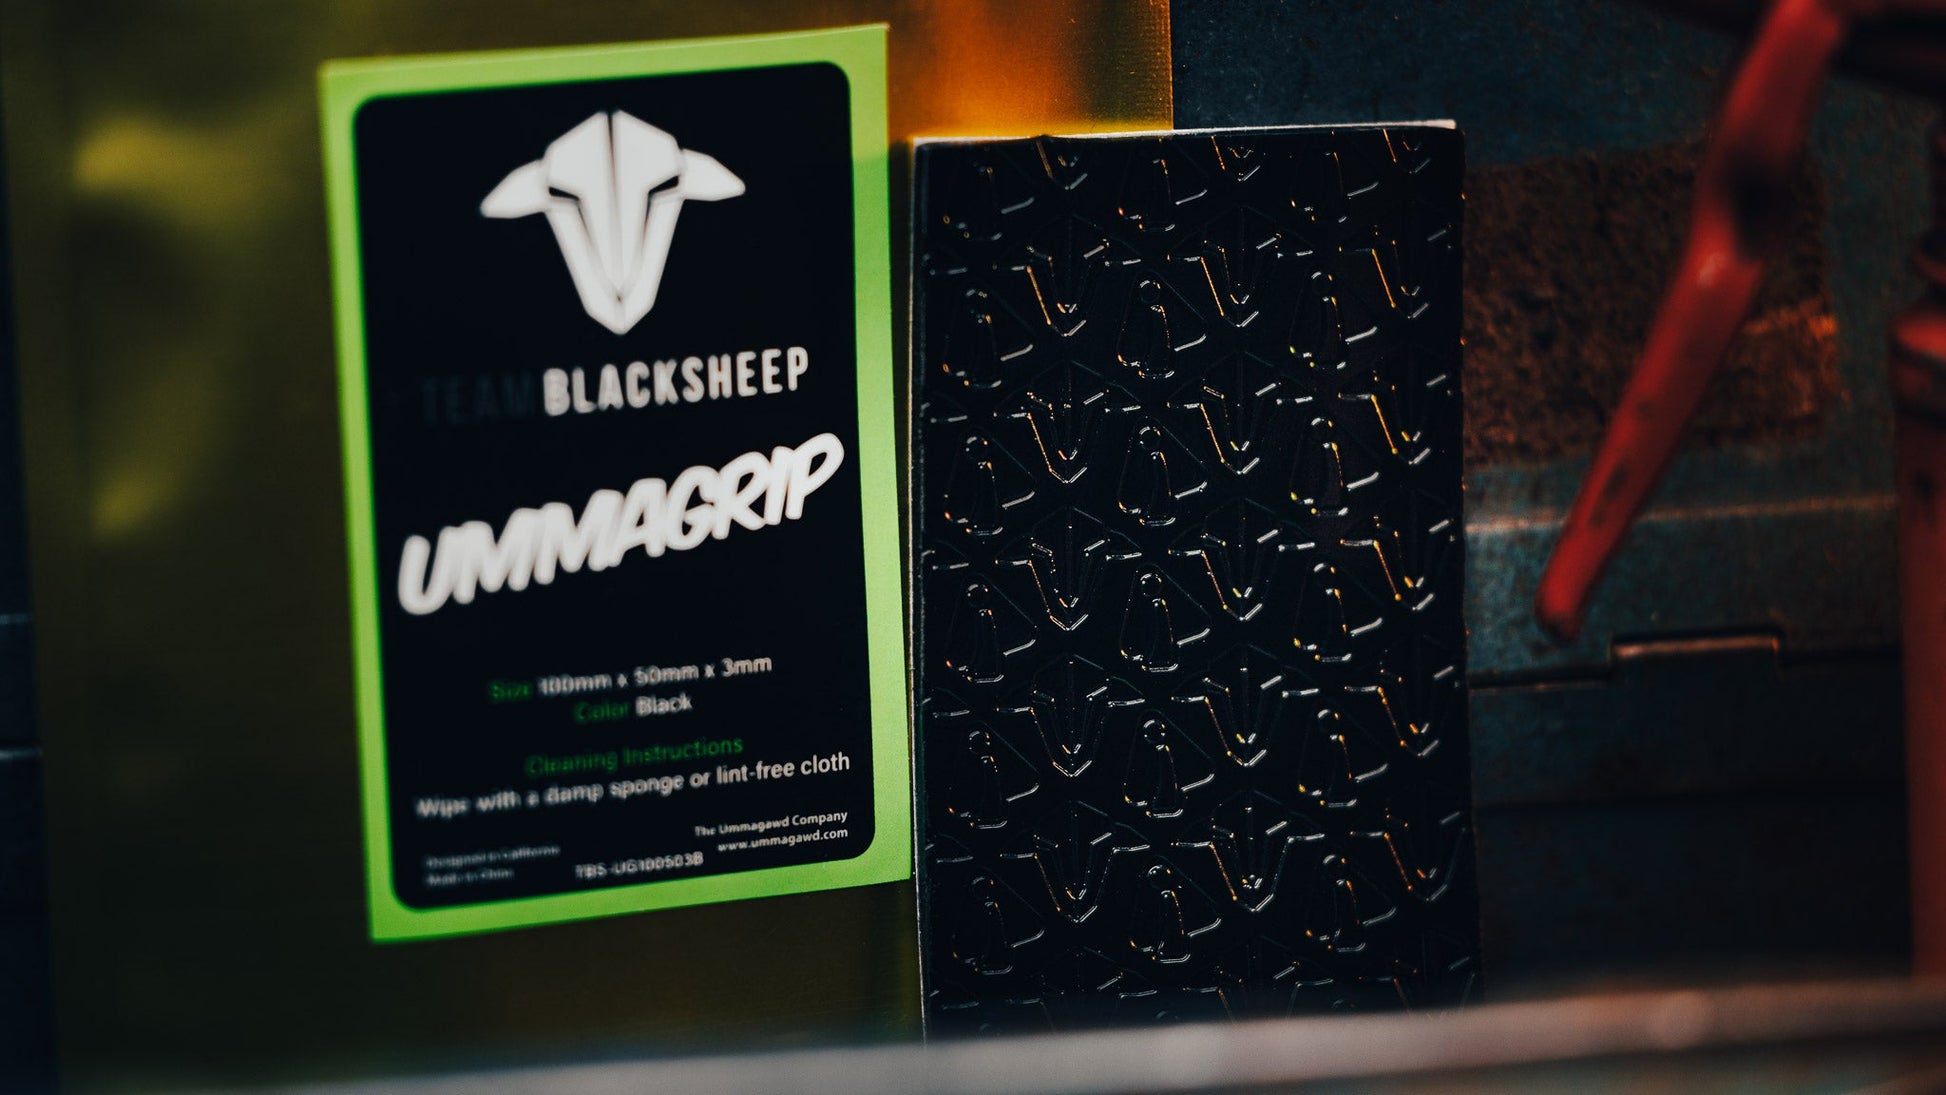 Team BlackSheep Online Store - Battery Anti-slip Pad (3pcs)